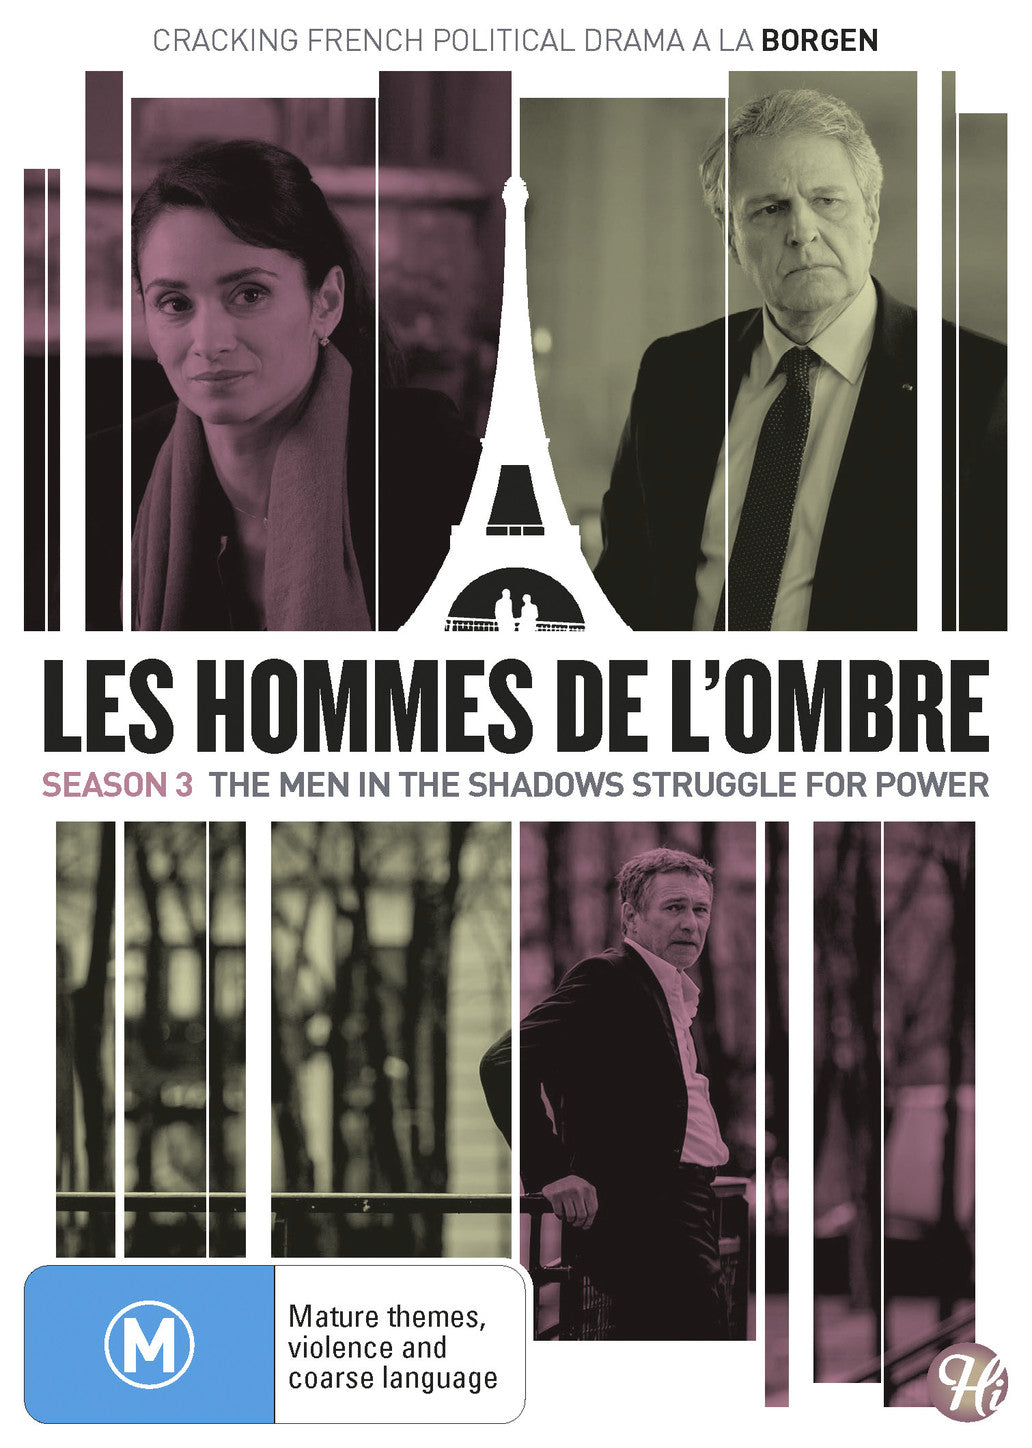 LES HOMMES DE L'OMBRE (THE SHADOW MEN) SEASON 3